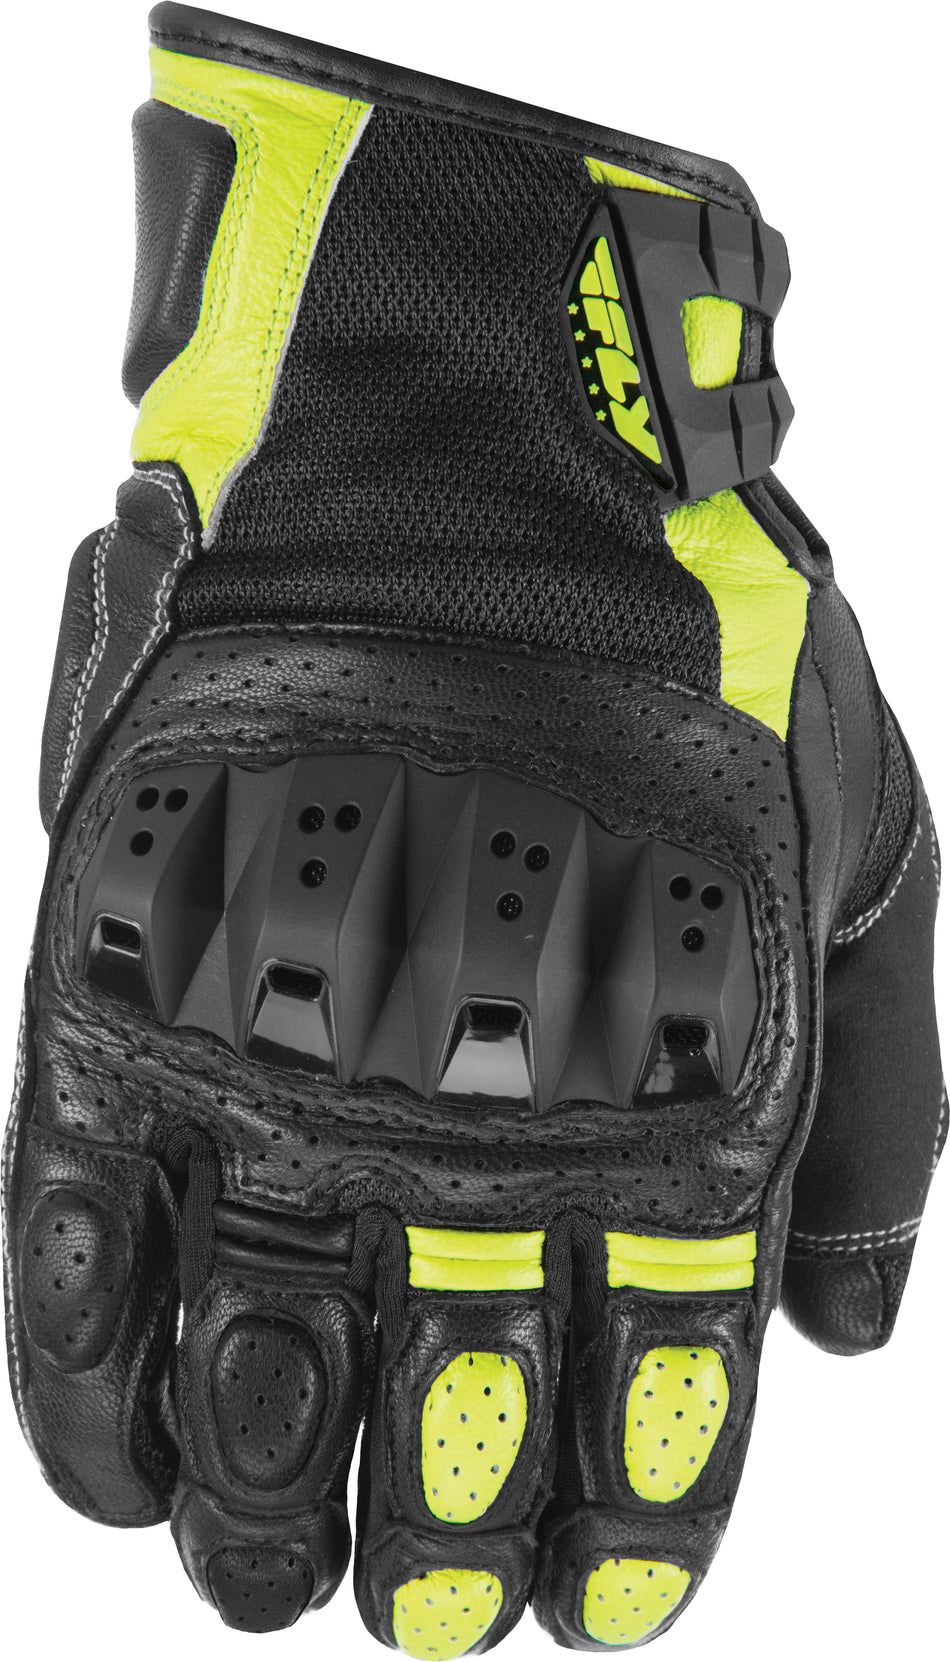 FLY RACING Brawler Gloves Black/Hi-Vis Sm #5884 476-2046~2